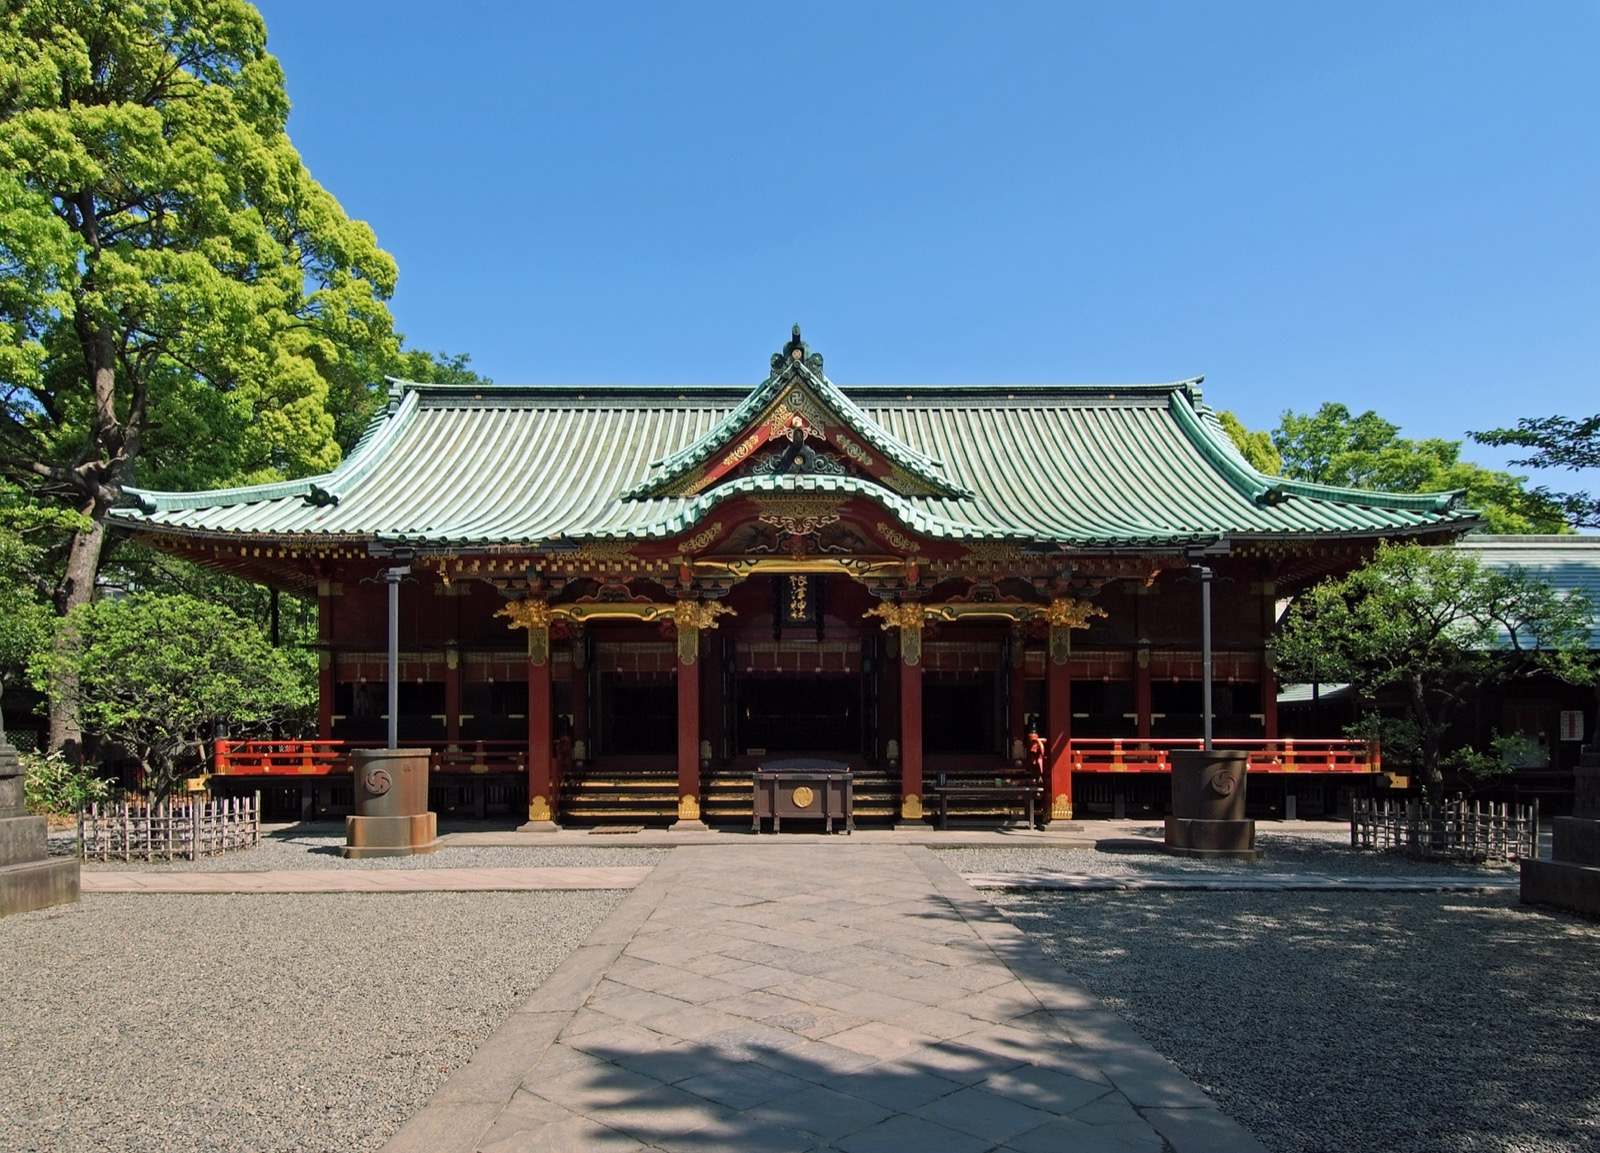 Photo of Nezu Jinja Shrine, Japan (Nezu Shrine, Bunkyo-ku Tokyo Japan, 1706. by Wiiii)